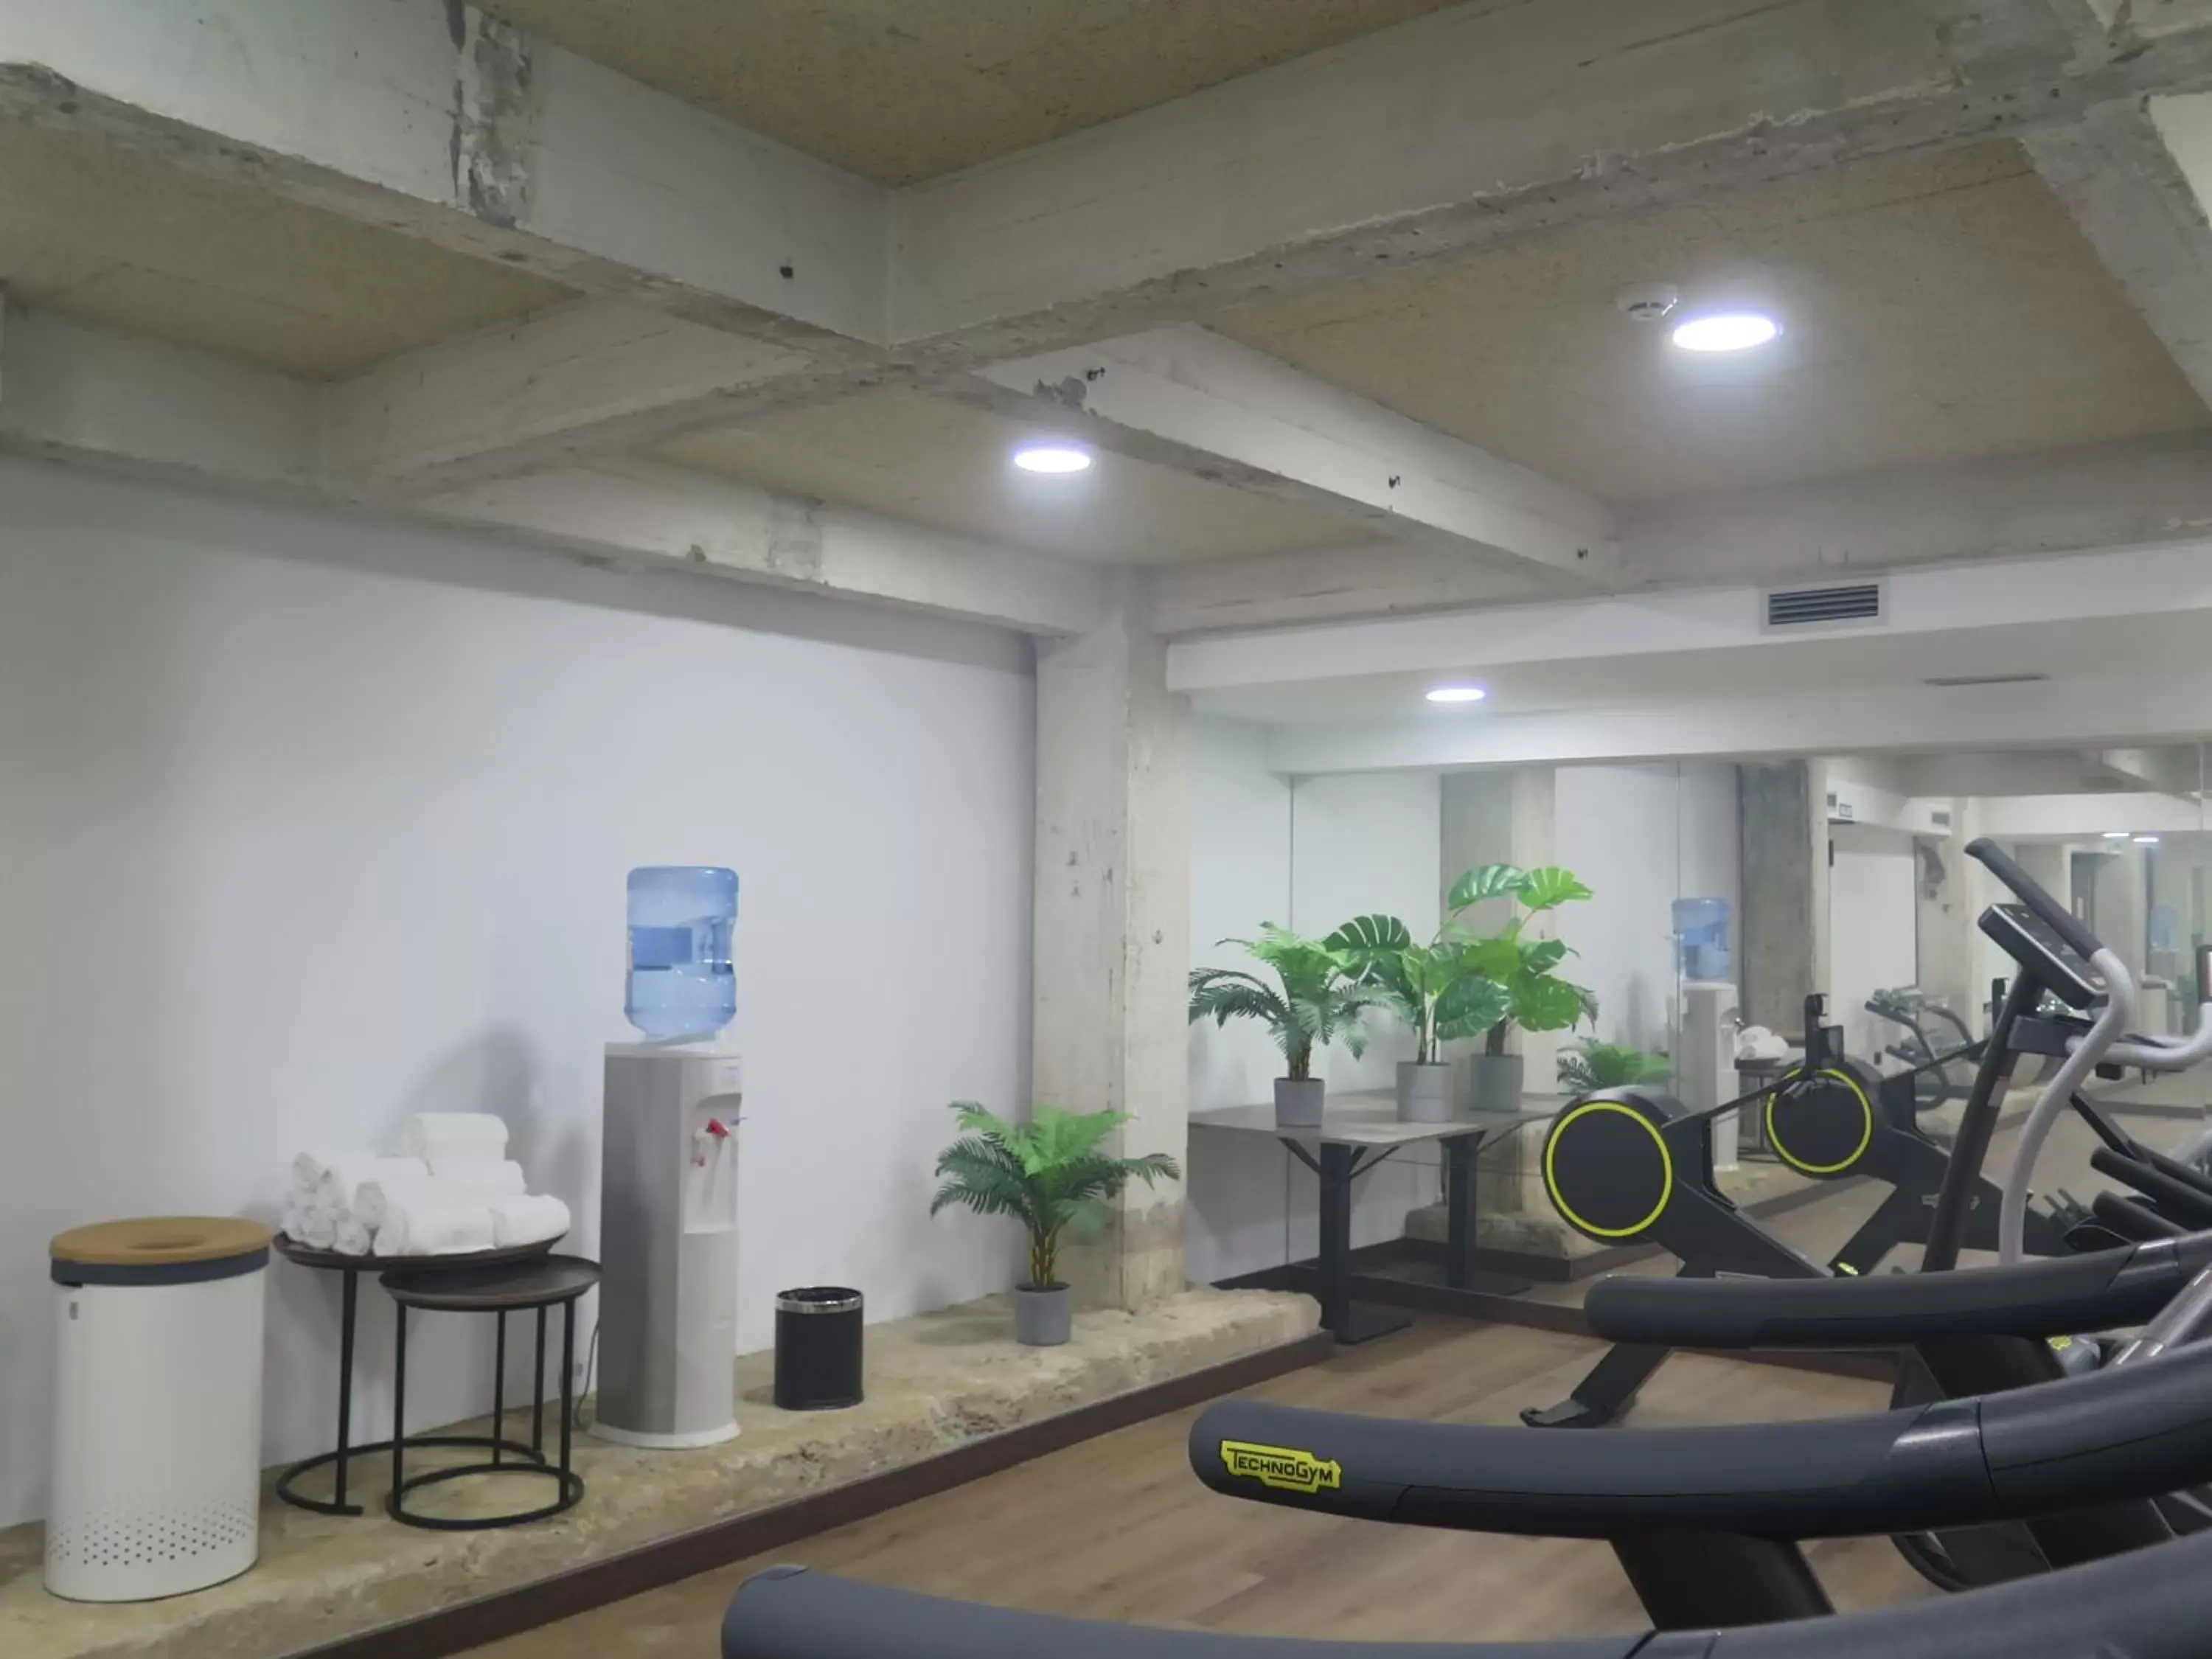 Fitness centre/facilities, Fitness Center/Facilities in Hotel Tayko Bilbao